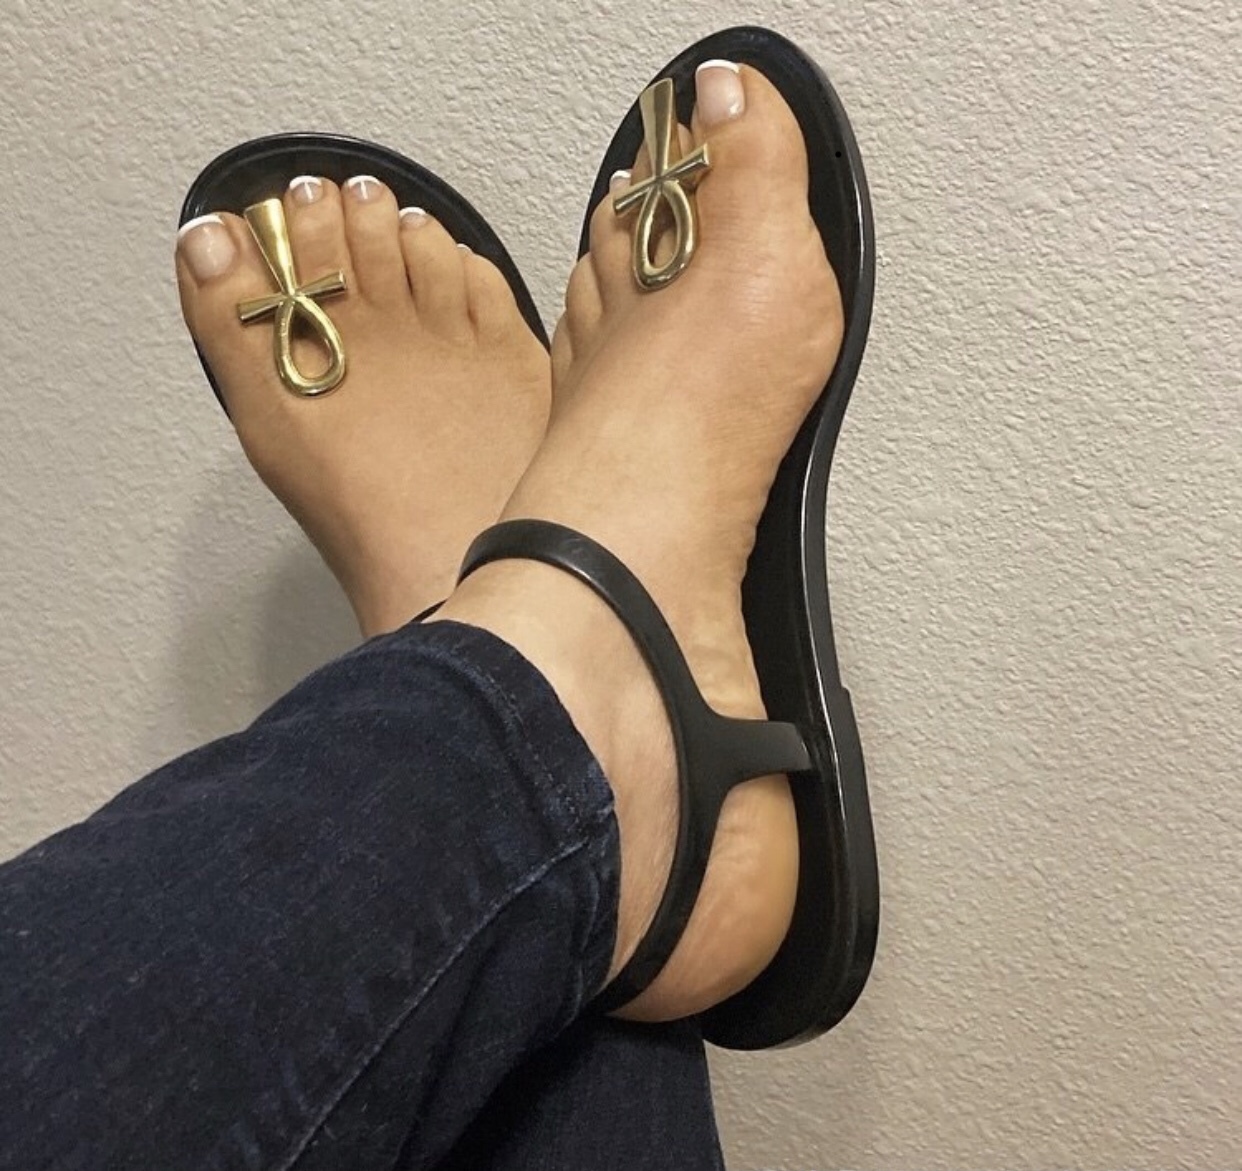 Rachel Dolezal Feet (3 images) - feet.wiki